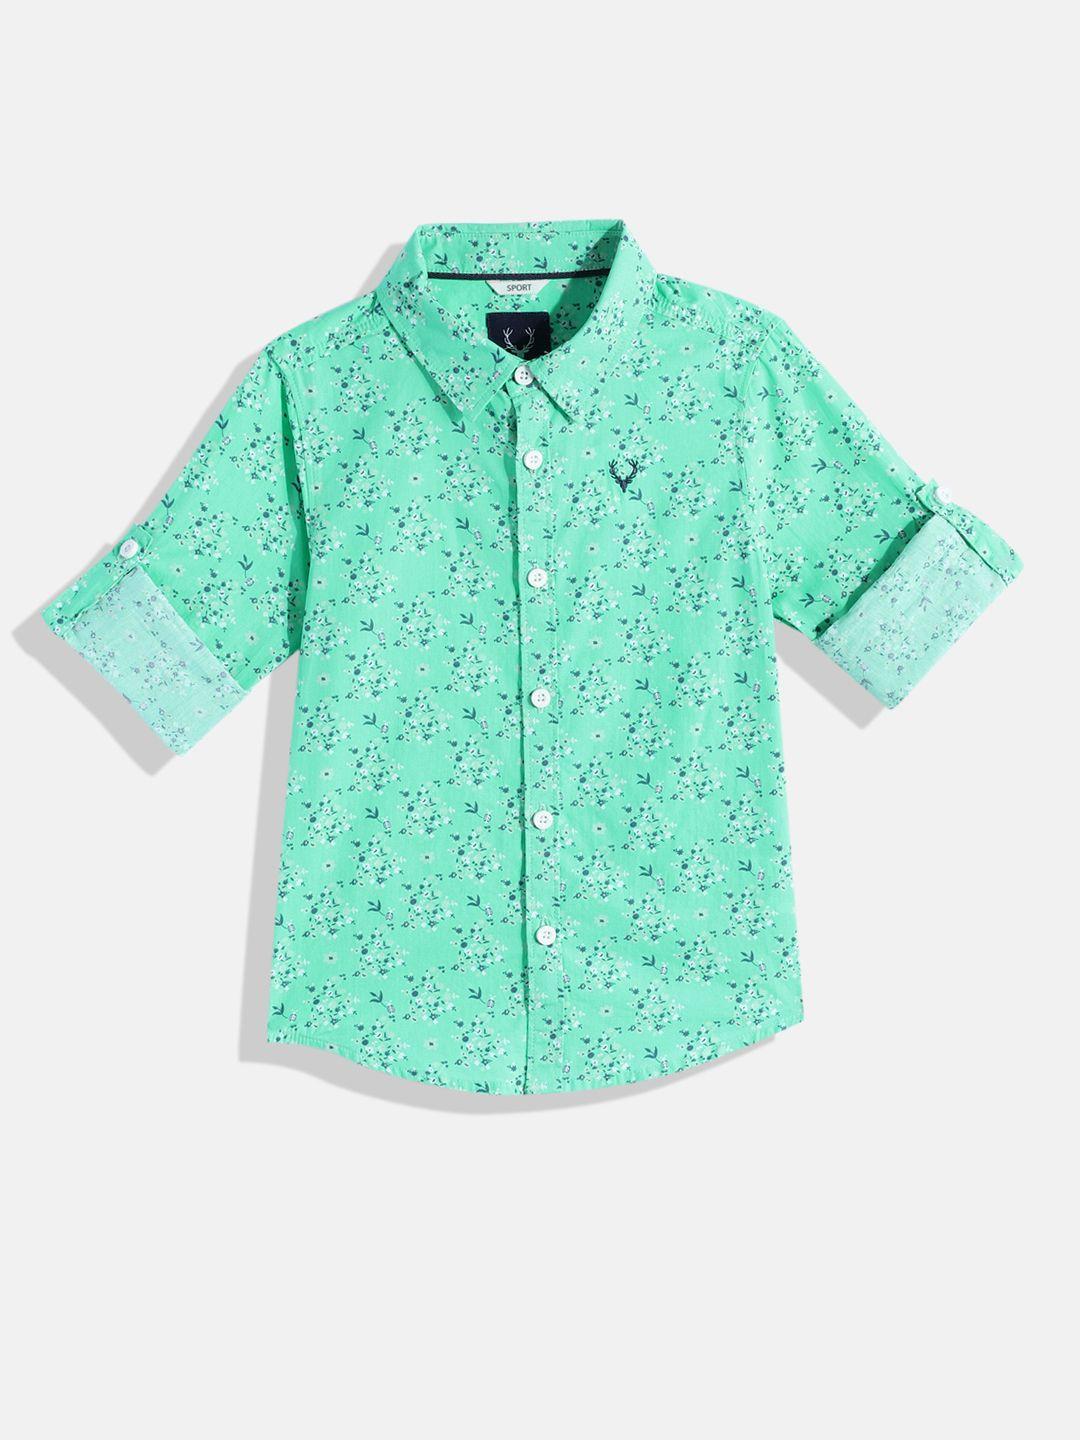 allen solly junior boys floral printed pure cotton casual shirt